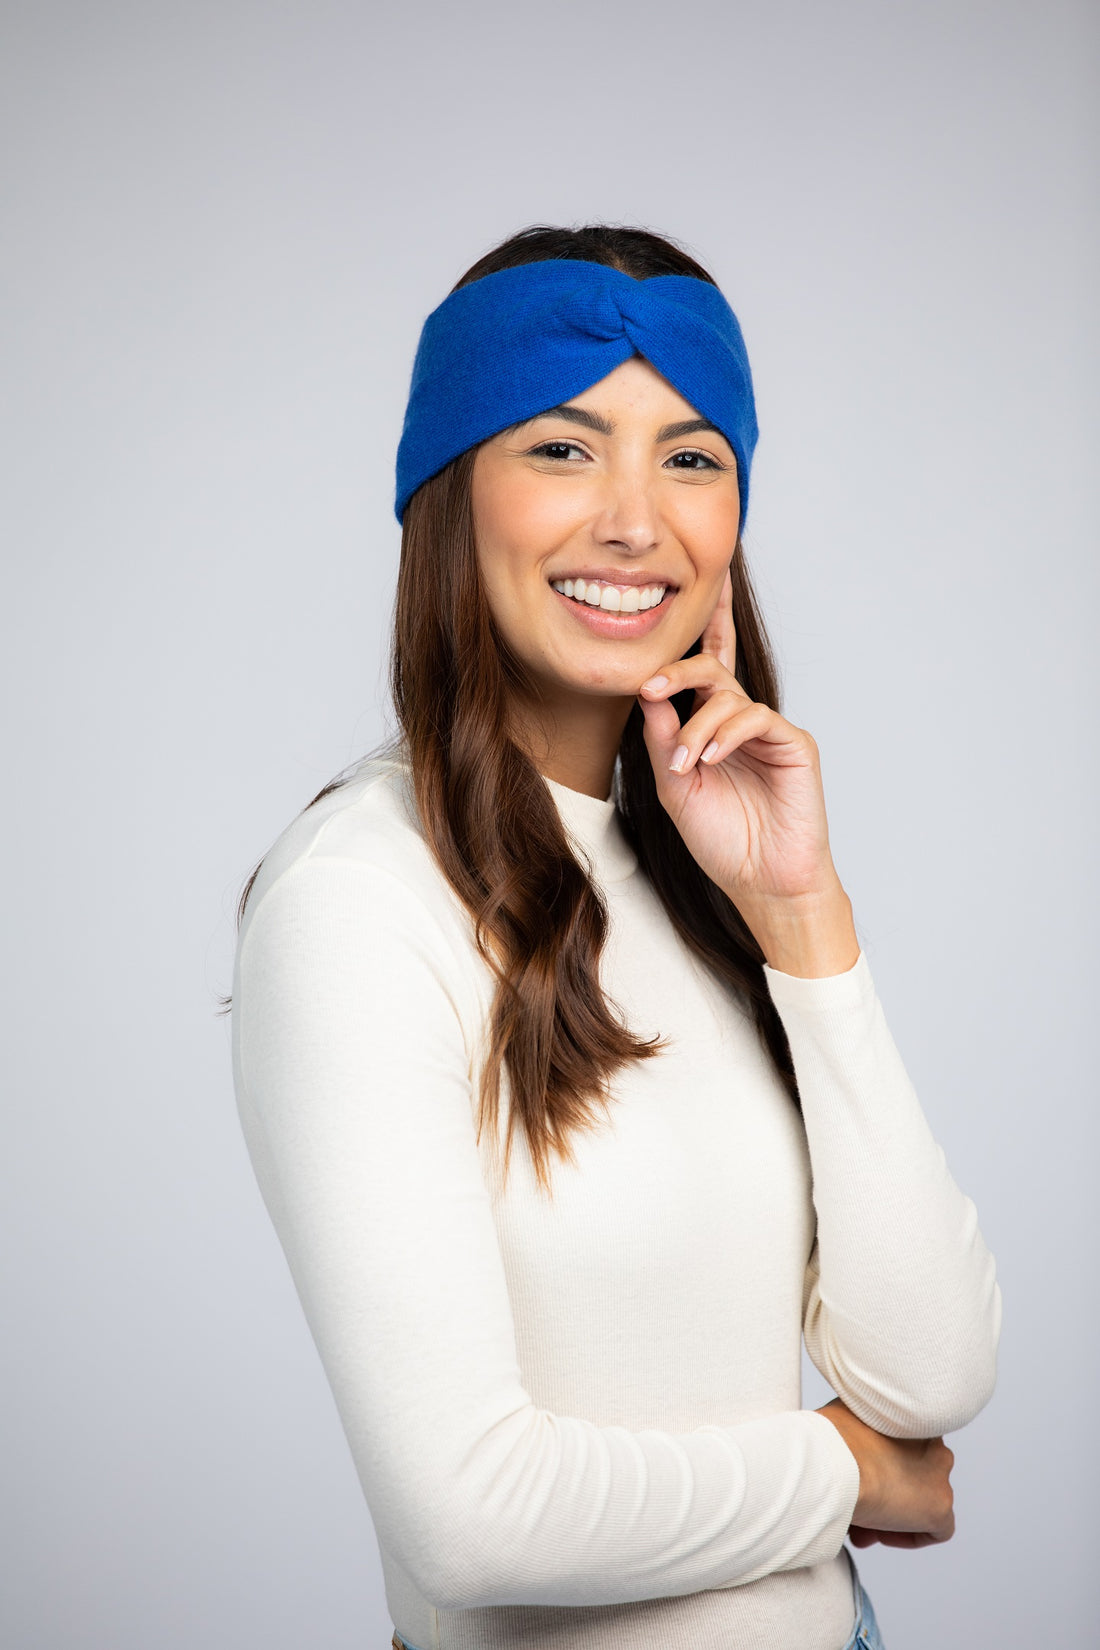 Royal Blue - Cashmere Headband for Women